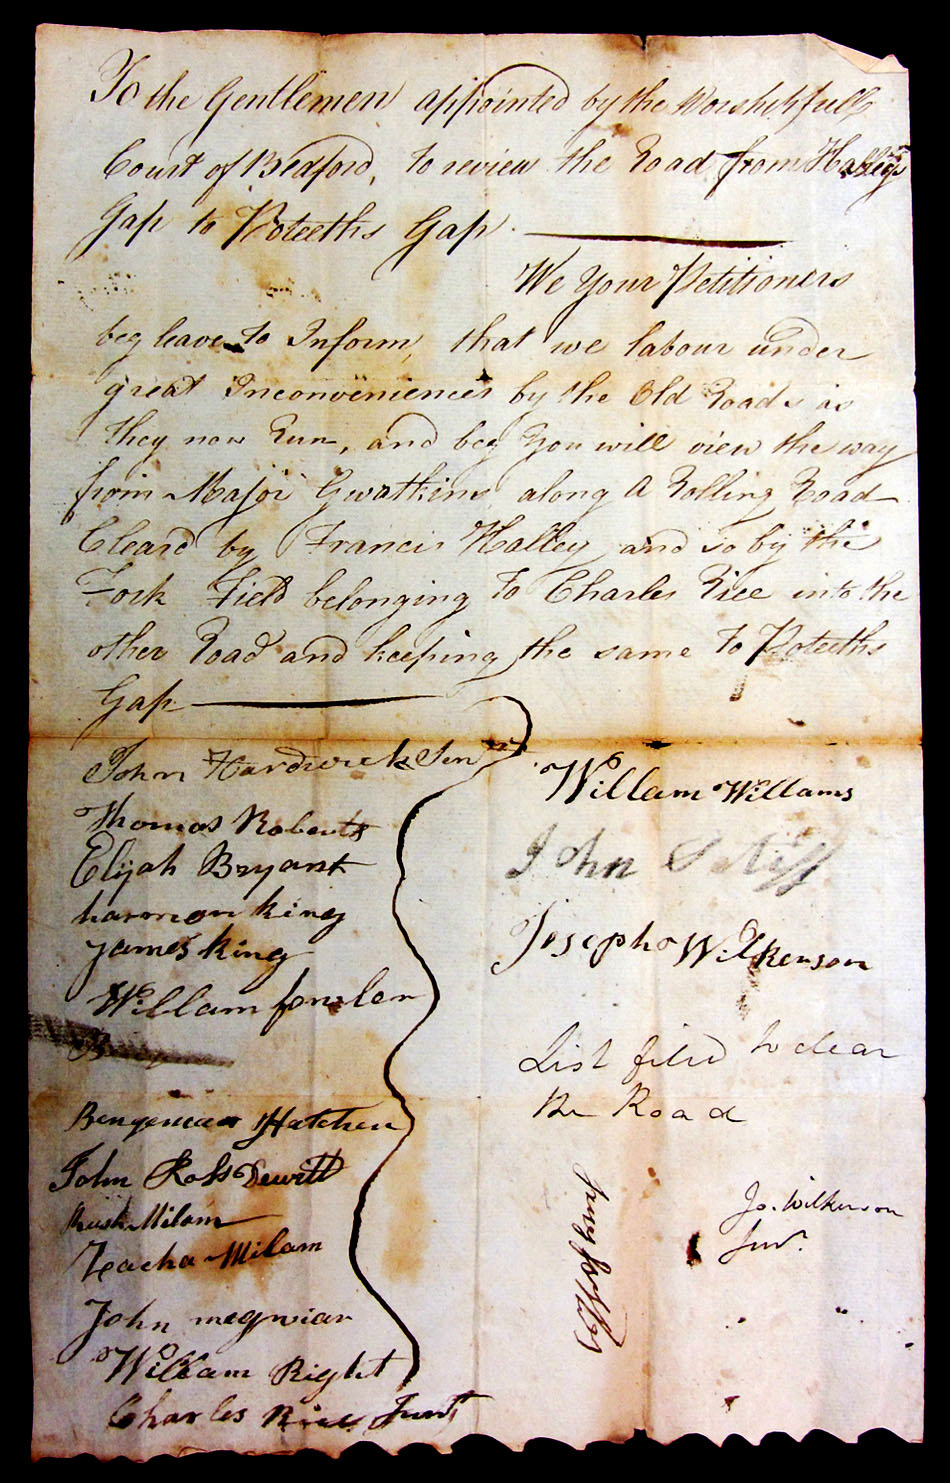 June 1785 Road List with Rush and Zachariah Milam